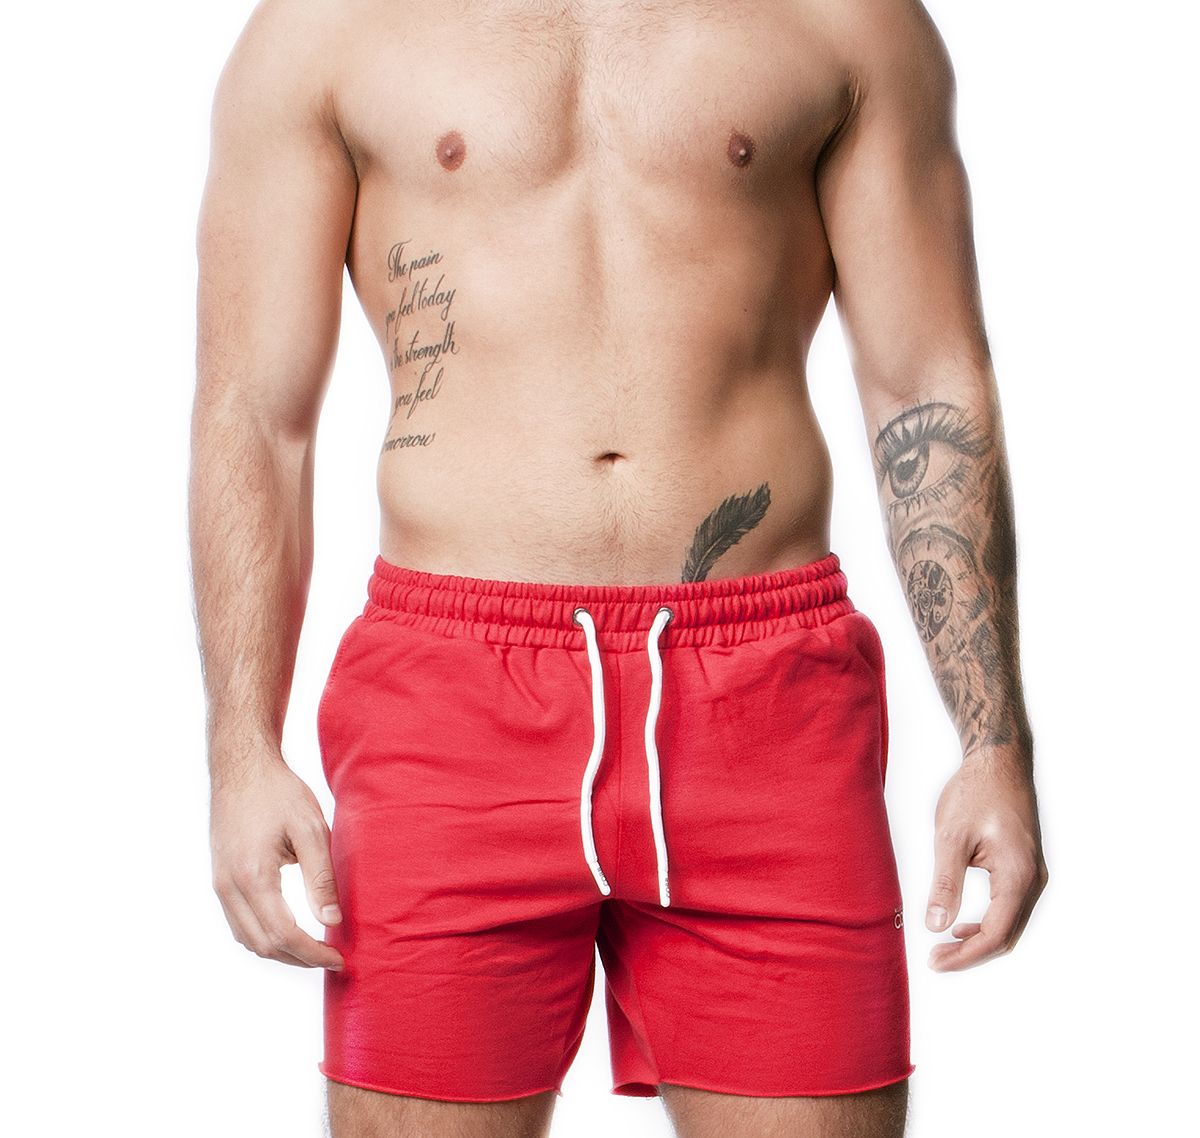 Alexander COBB Pantaloni sportivi LONG RED, rosso